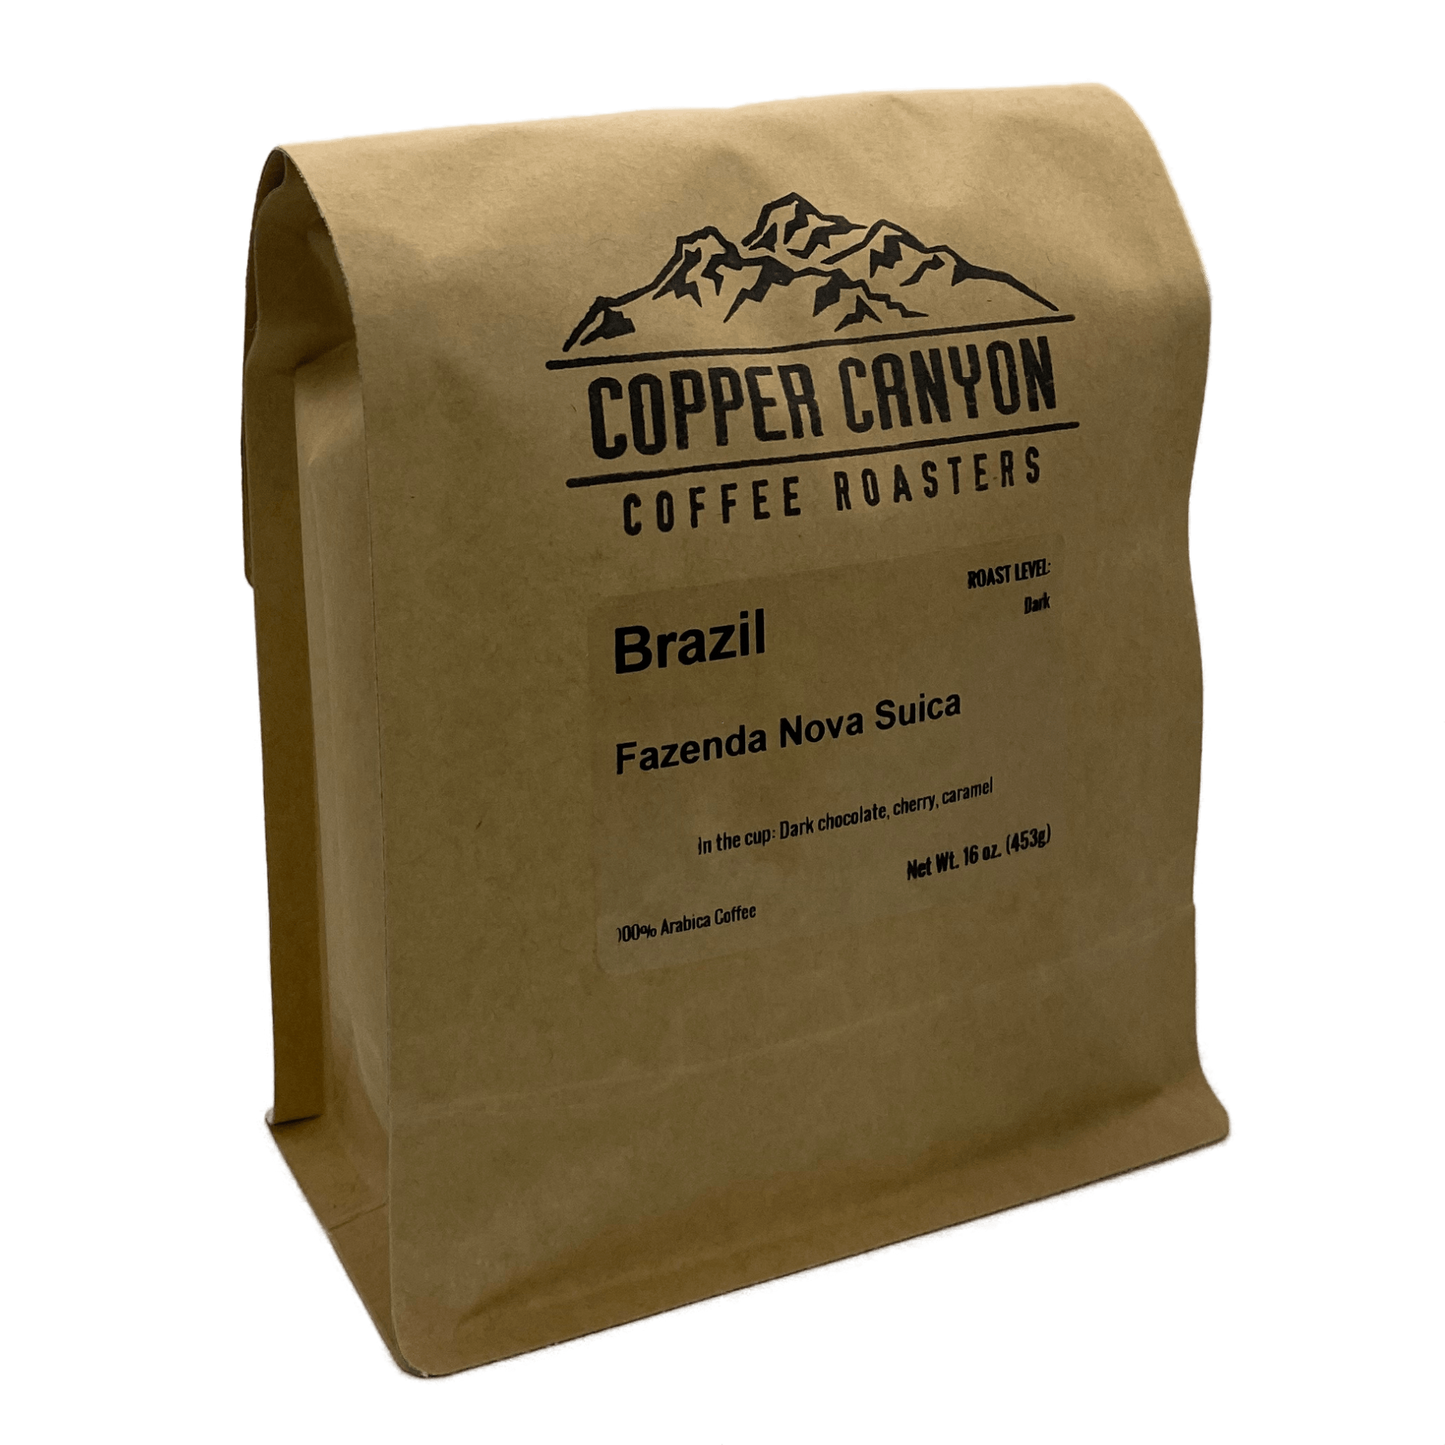 16 oz bag of Brazil single origin, dark roast coffee